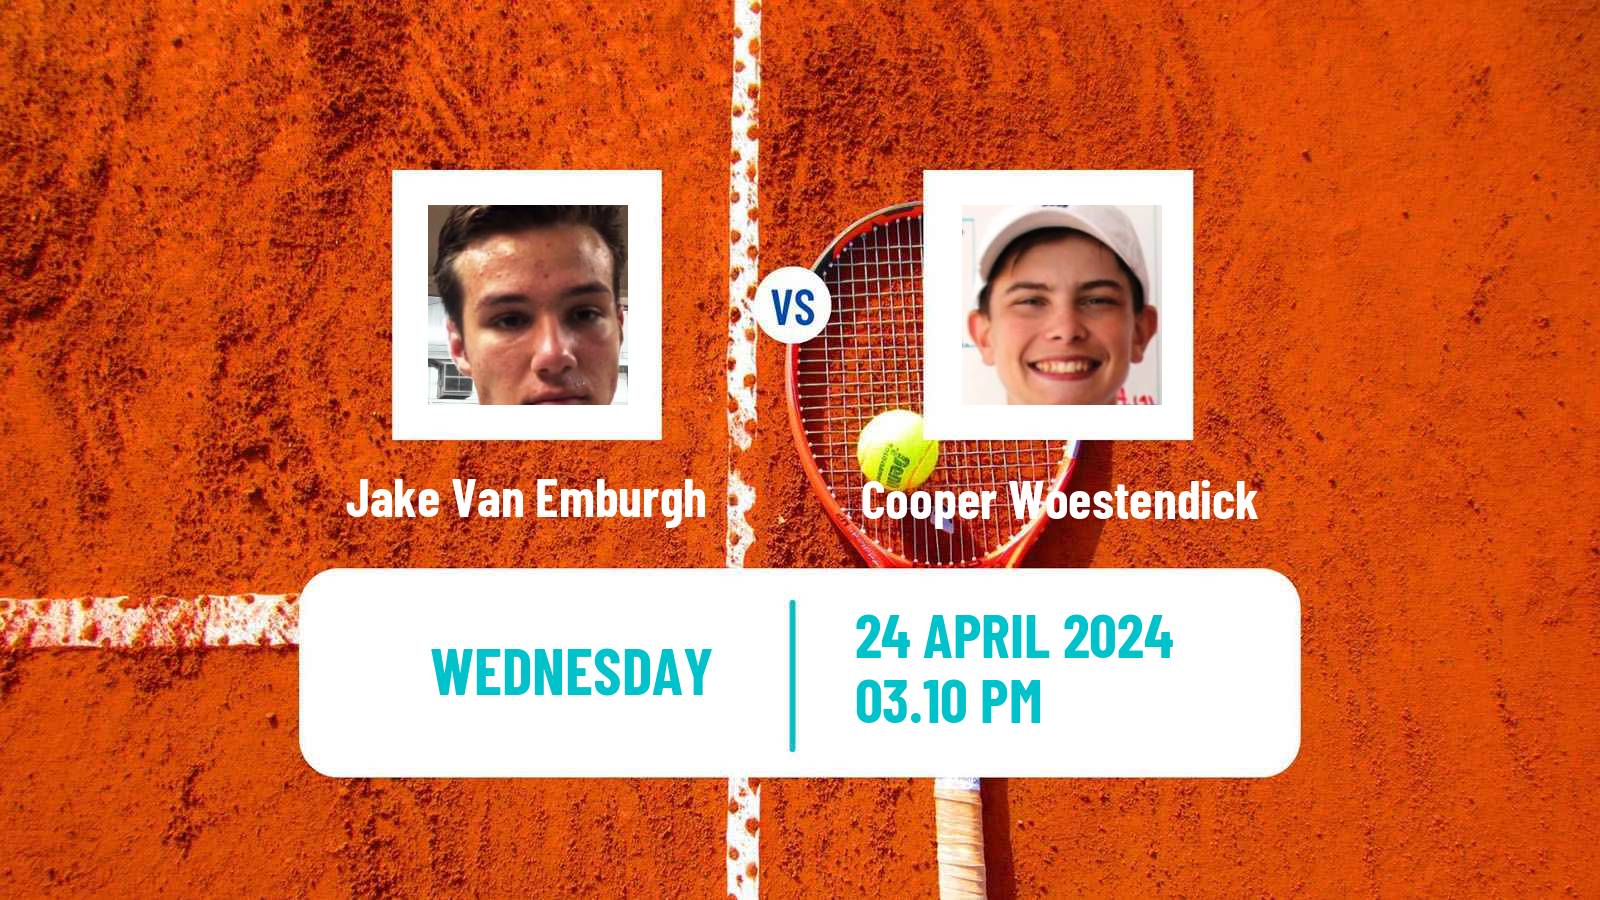 Tennis ITF M15 Vero Beach Fl Men Jake Van Emburgh - Cooper Woestendick